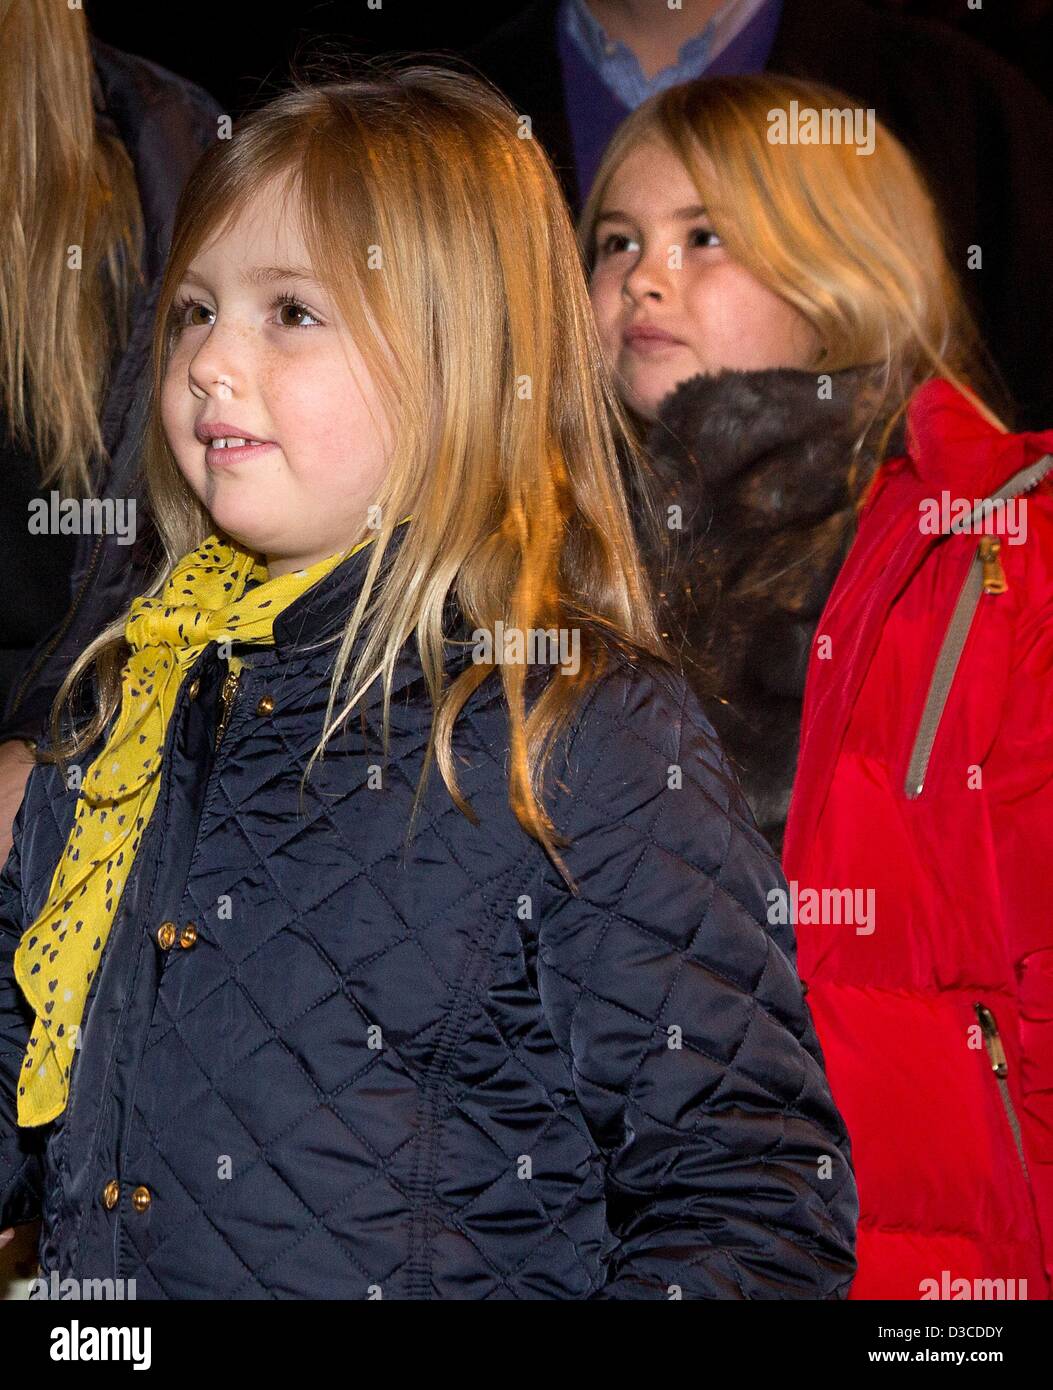 dutch-princesses-amalia-r-and-princess-alexia-and-their-parents-leave-D3CDDY.jpg